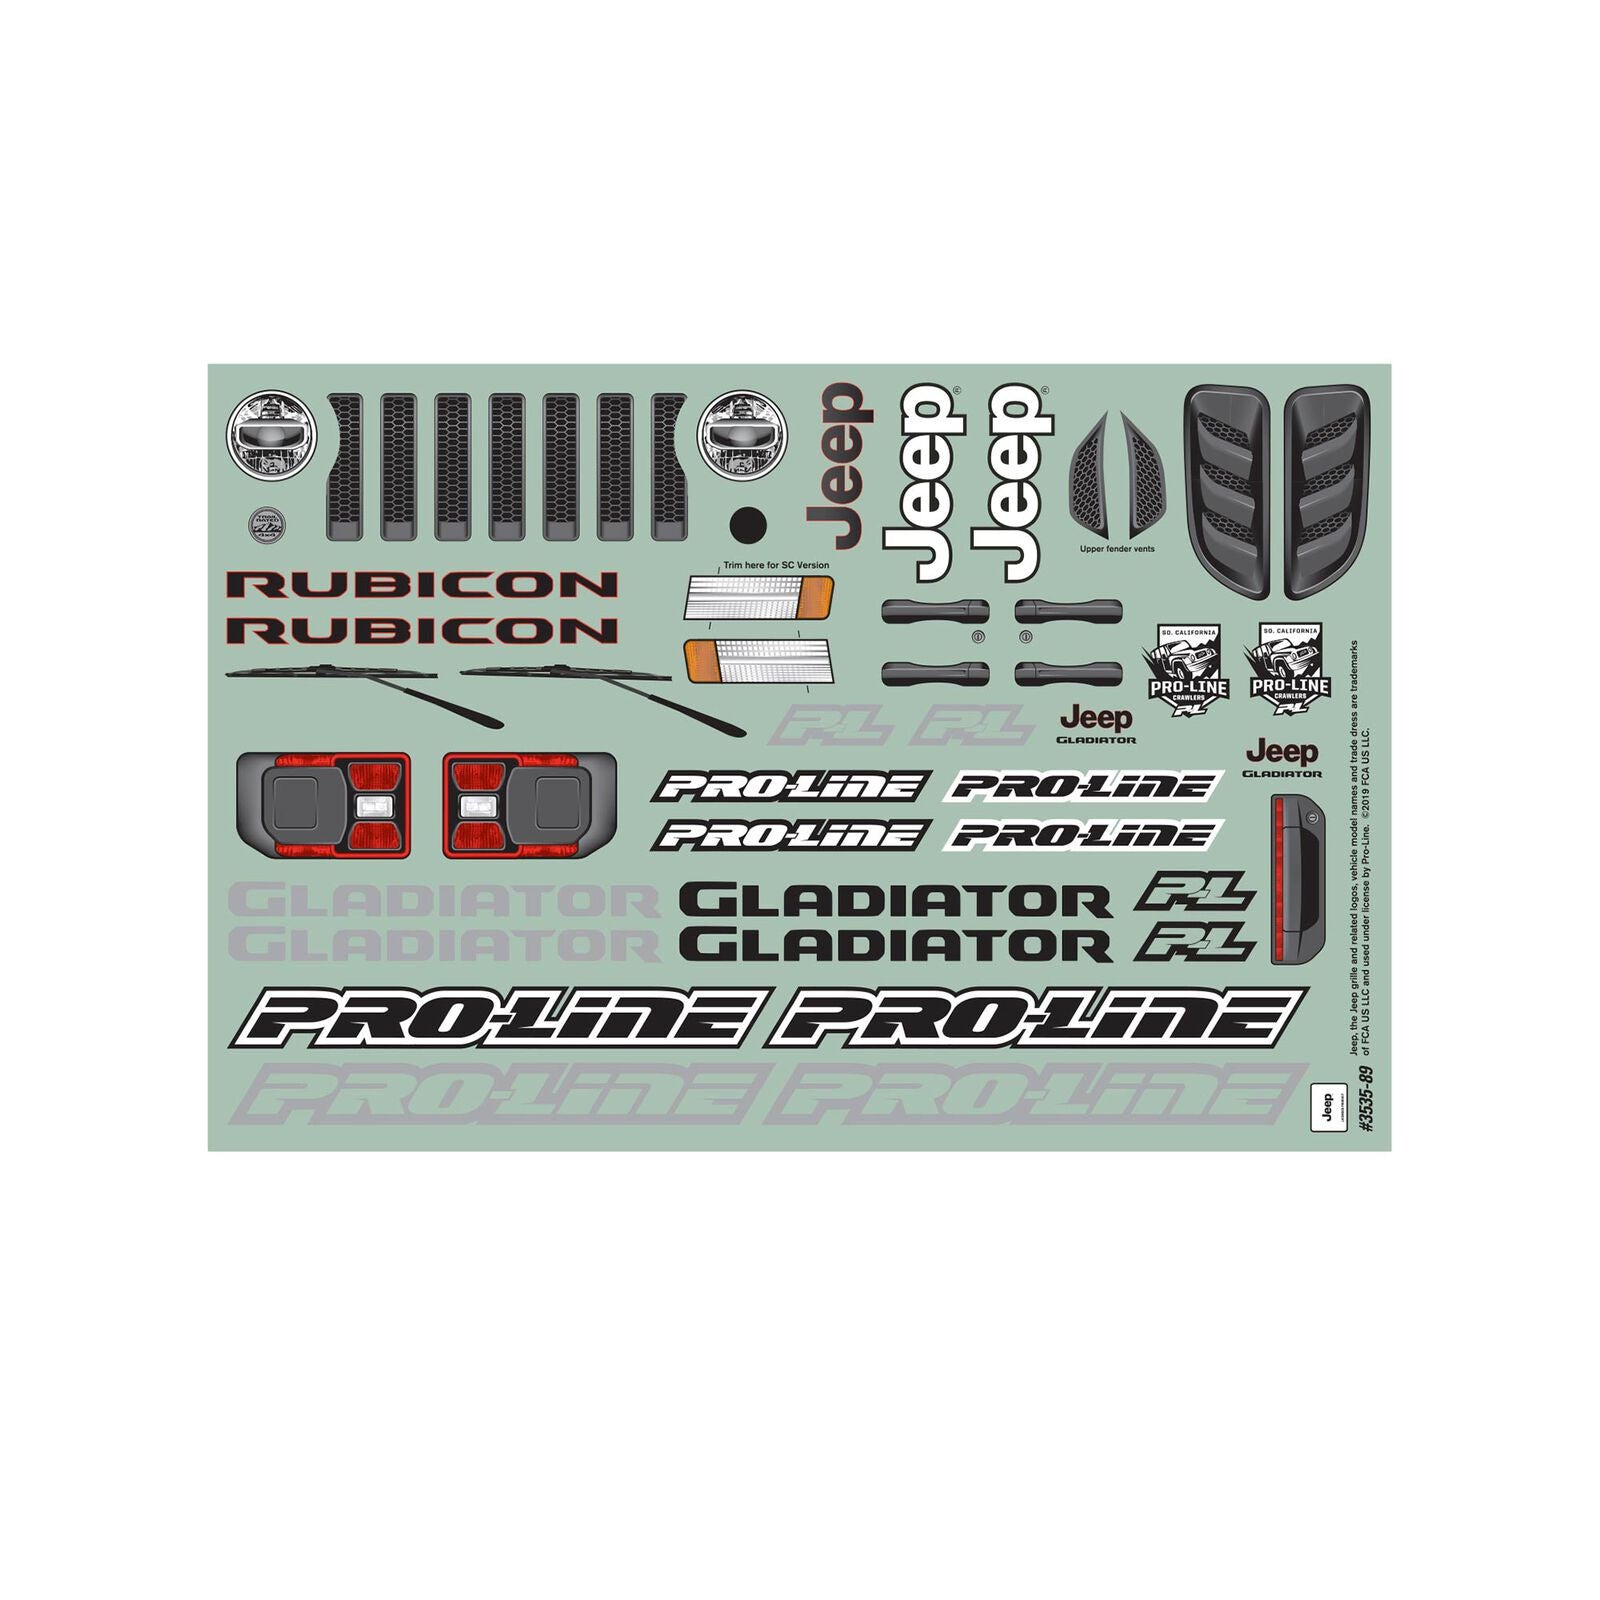 Proline Carrosserie Jeep Gladiator Rubicon 3535-00